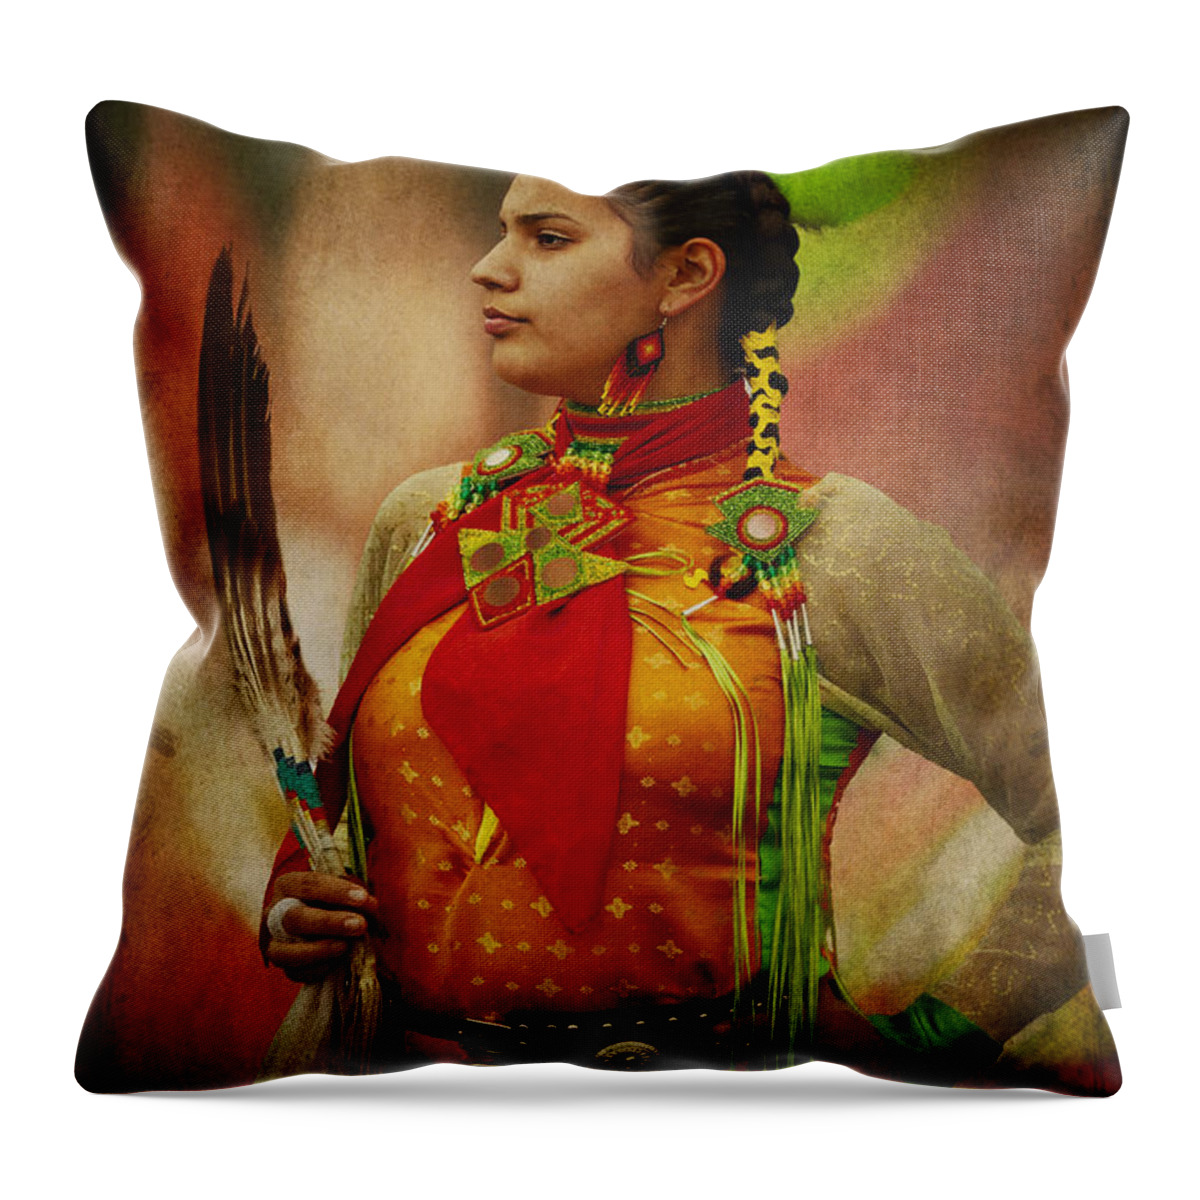 Canadian Throw Pillow featuring the photograph Canadian Aboriginal Woman by Eduardo Tavares